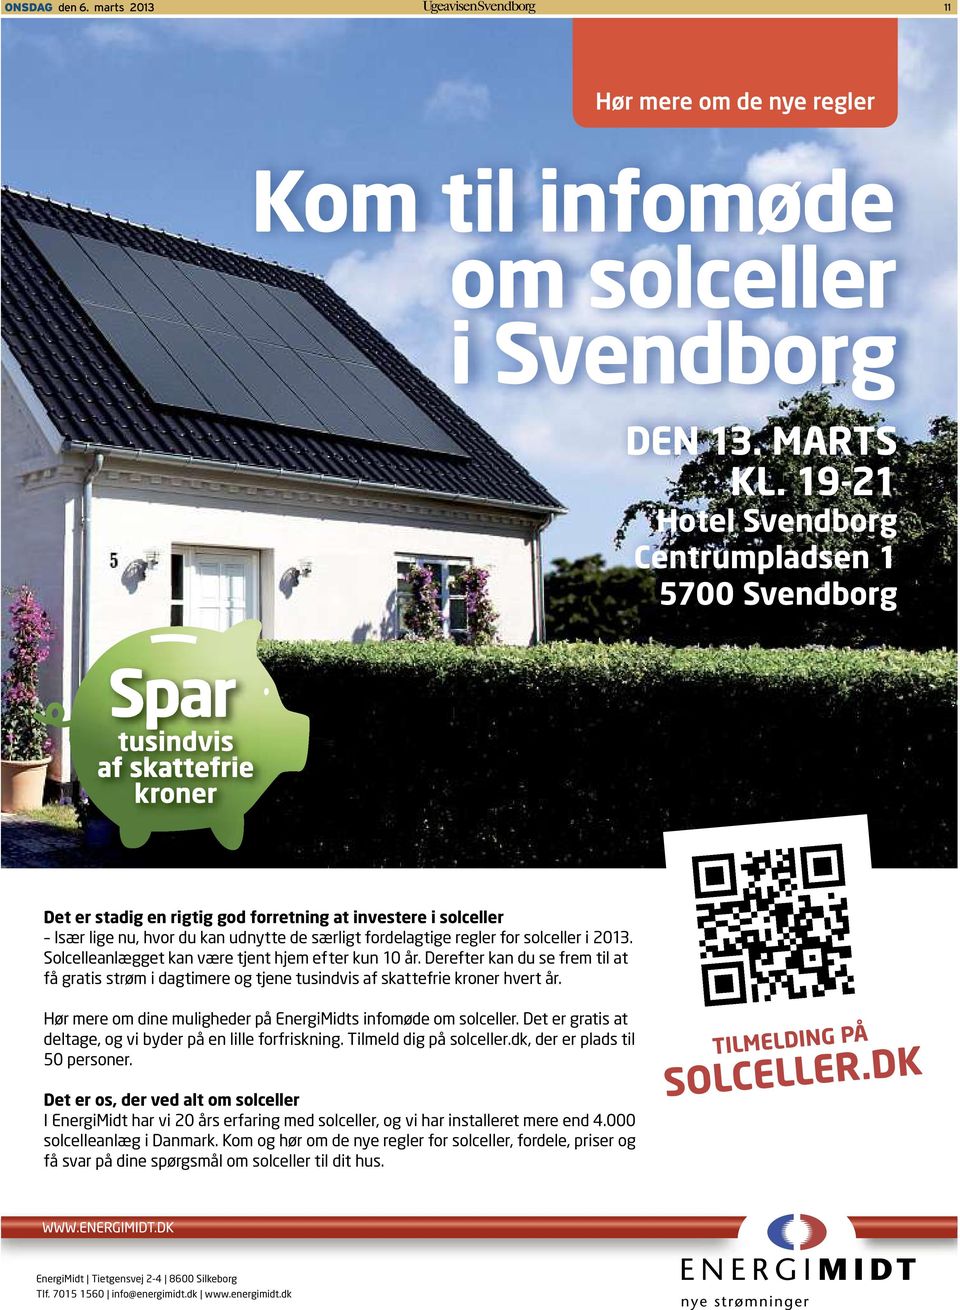 Svendborg i comedyens tegn - PDF Free Download